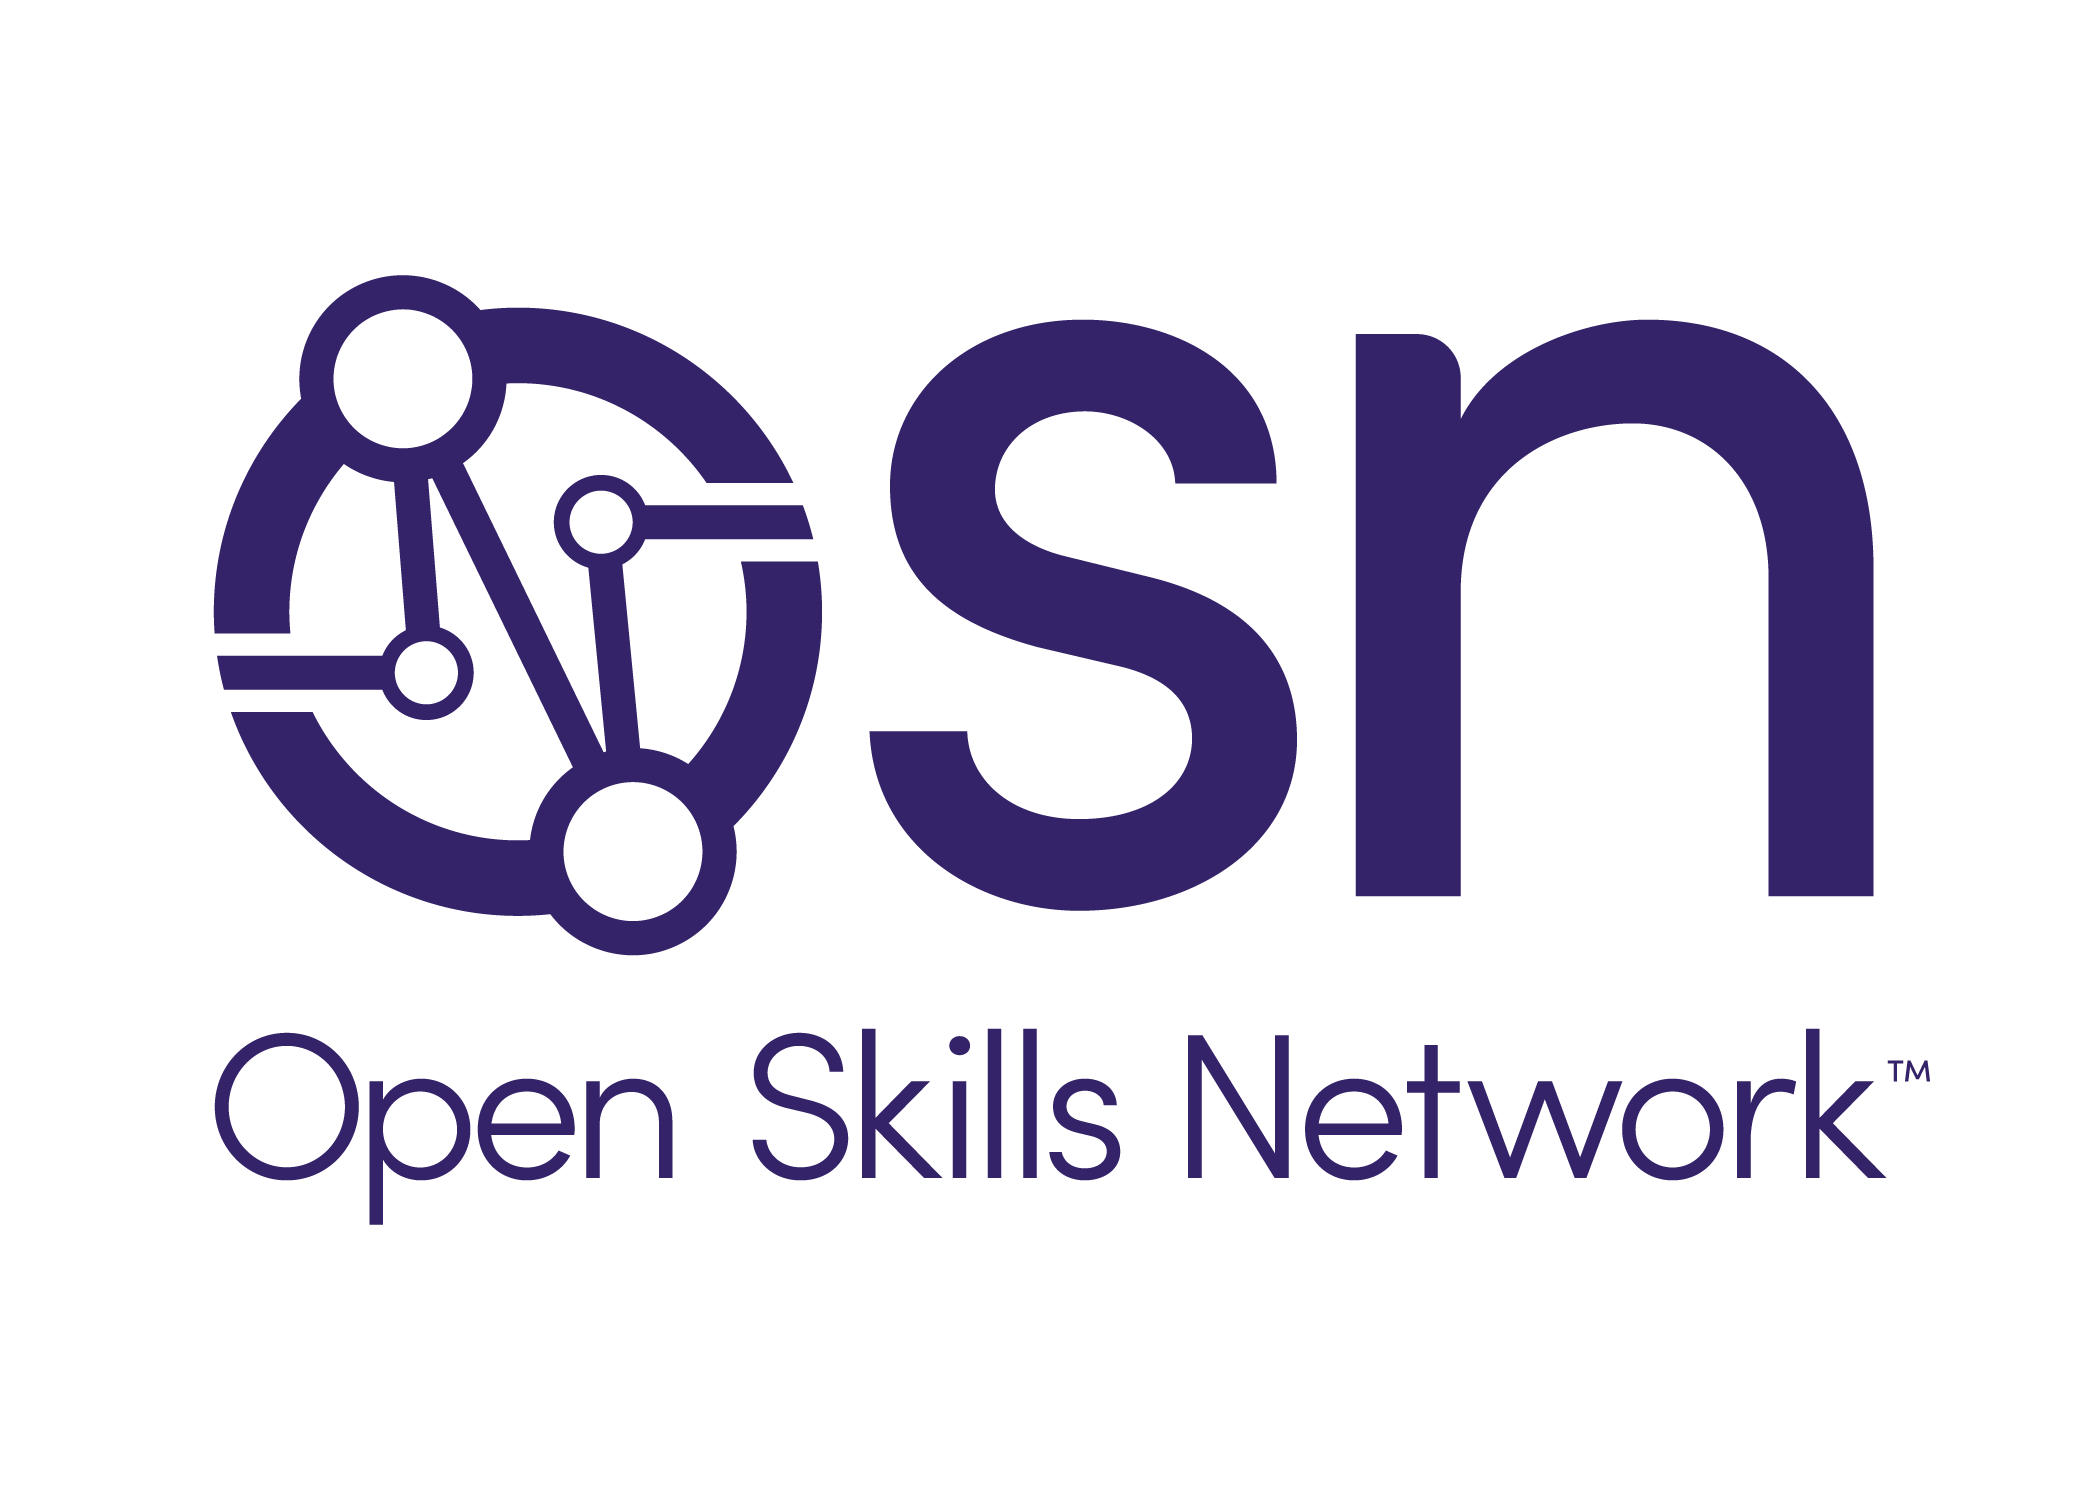 Open Skills Network 